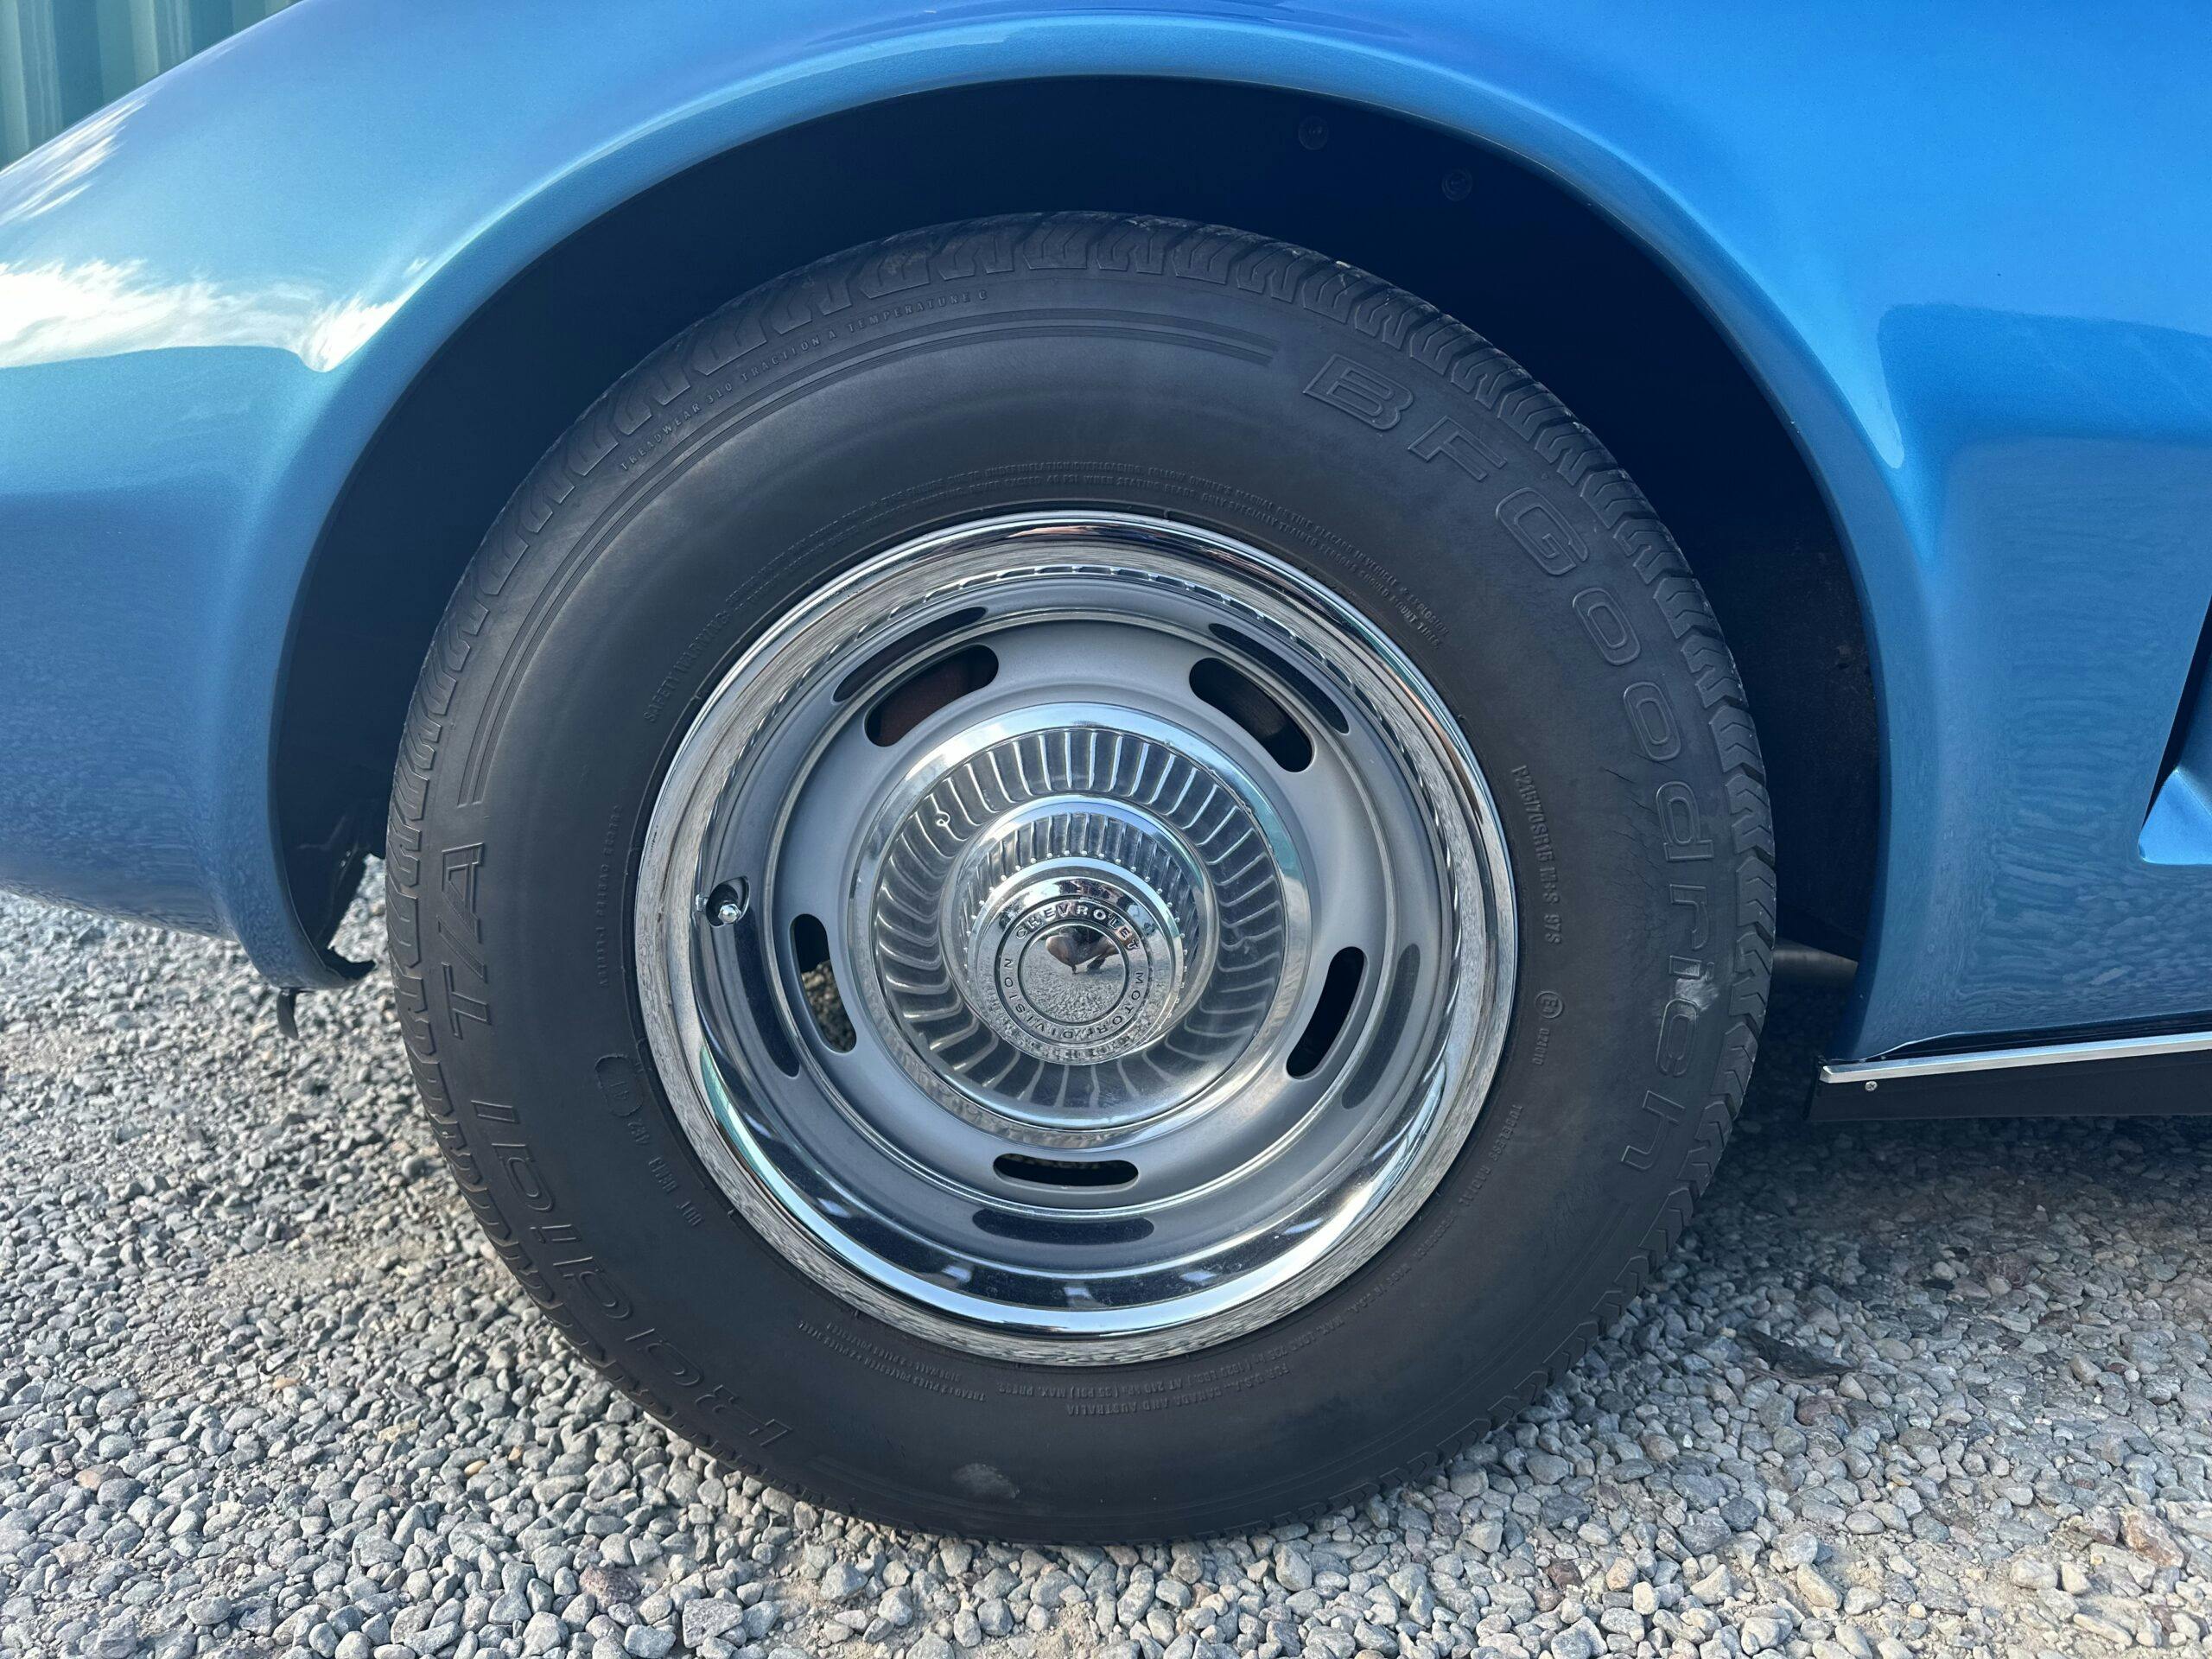 1968 Corvette C2 Stingray wheel tire